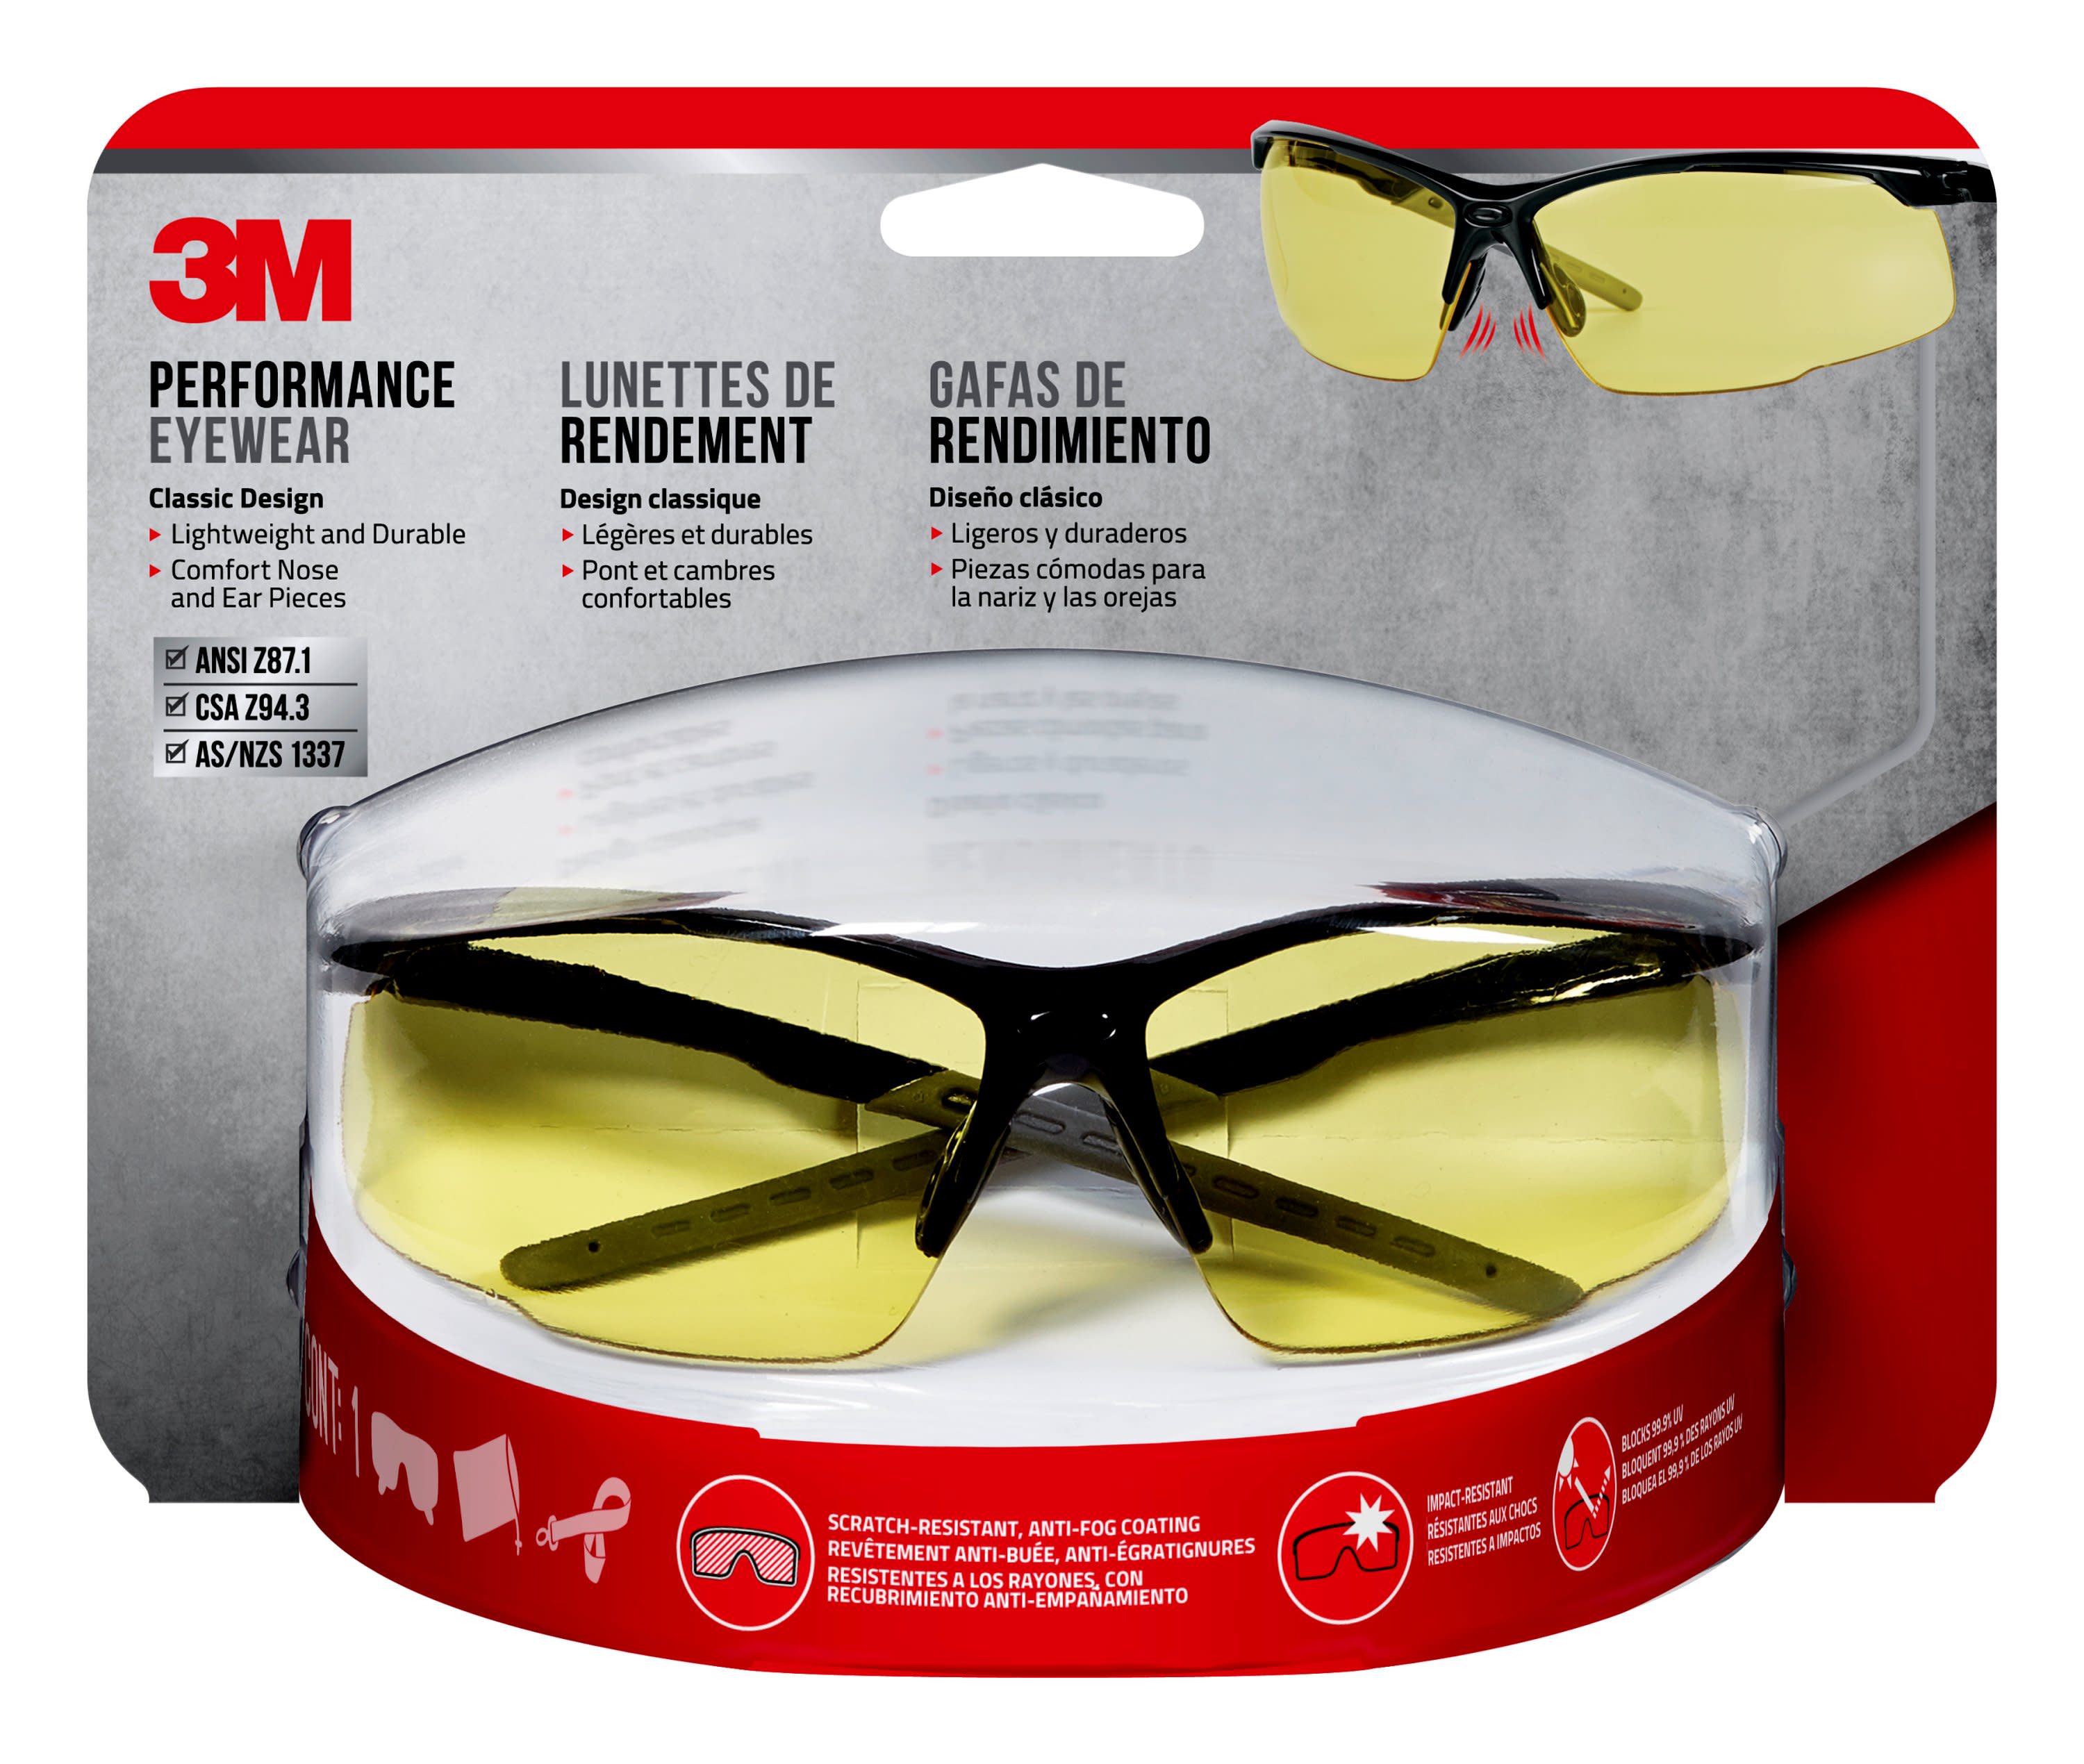 3M Multi-purpose Plastic Anti-fog Safety Glasses in the Eye